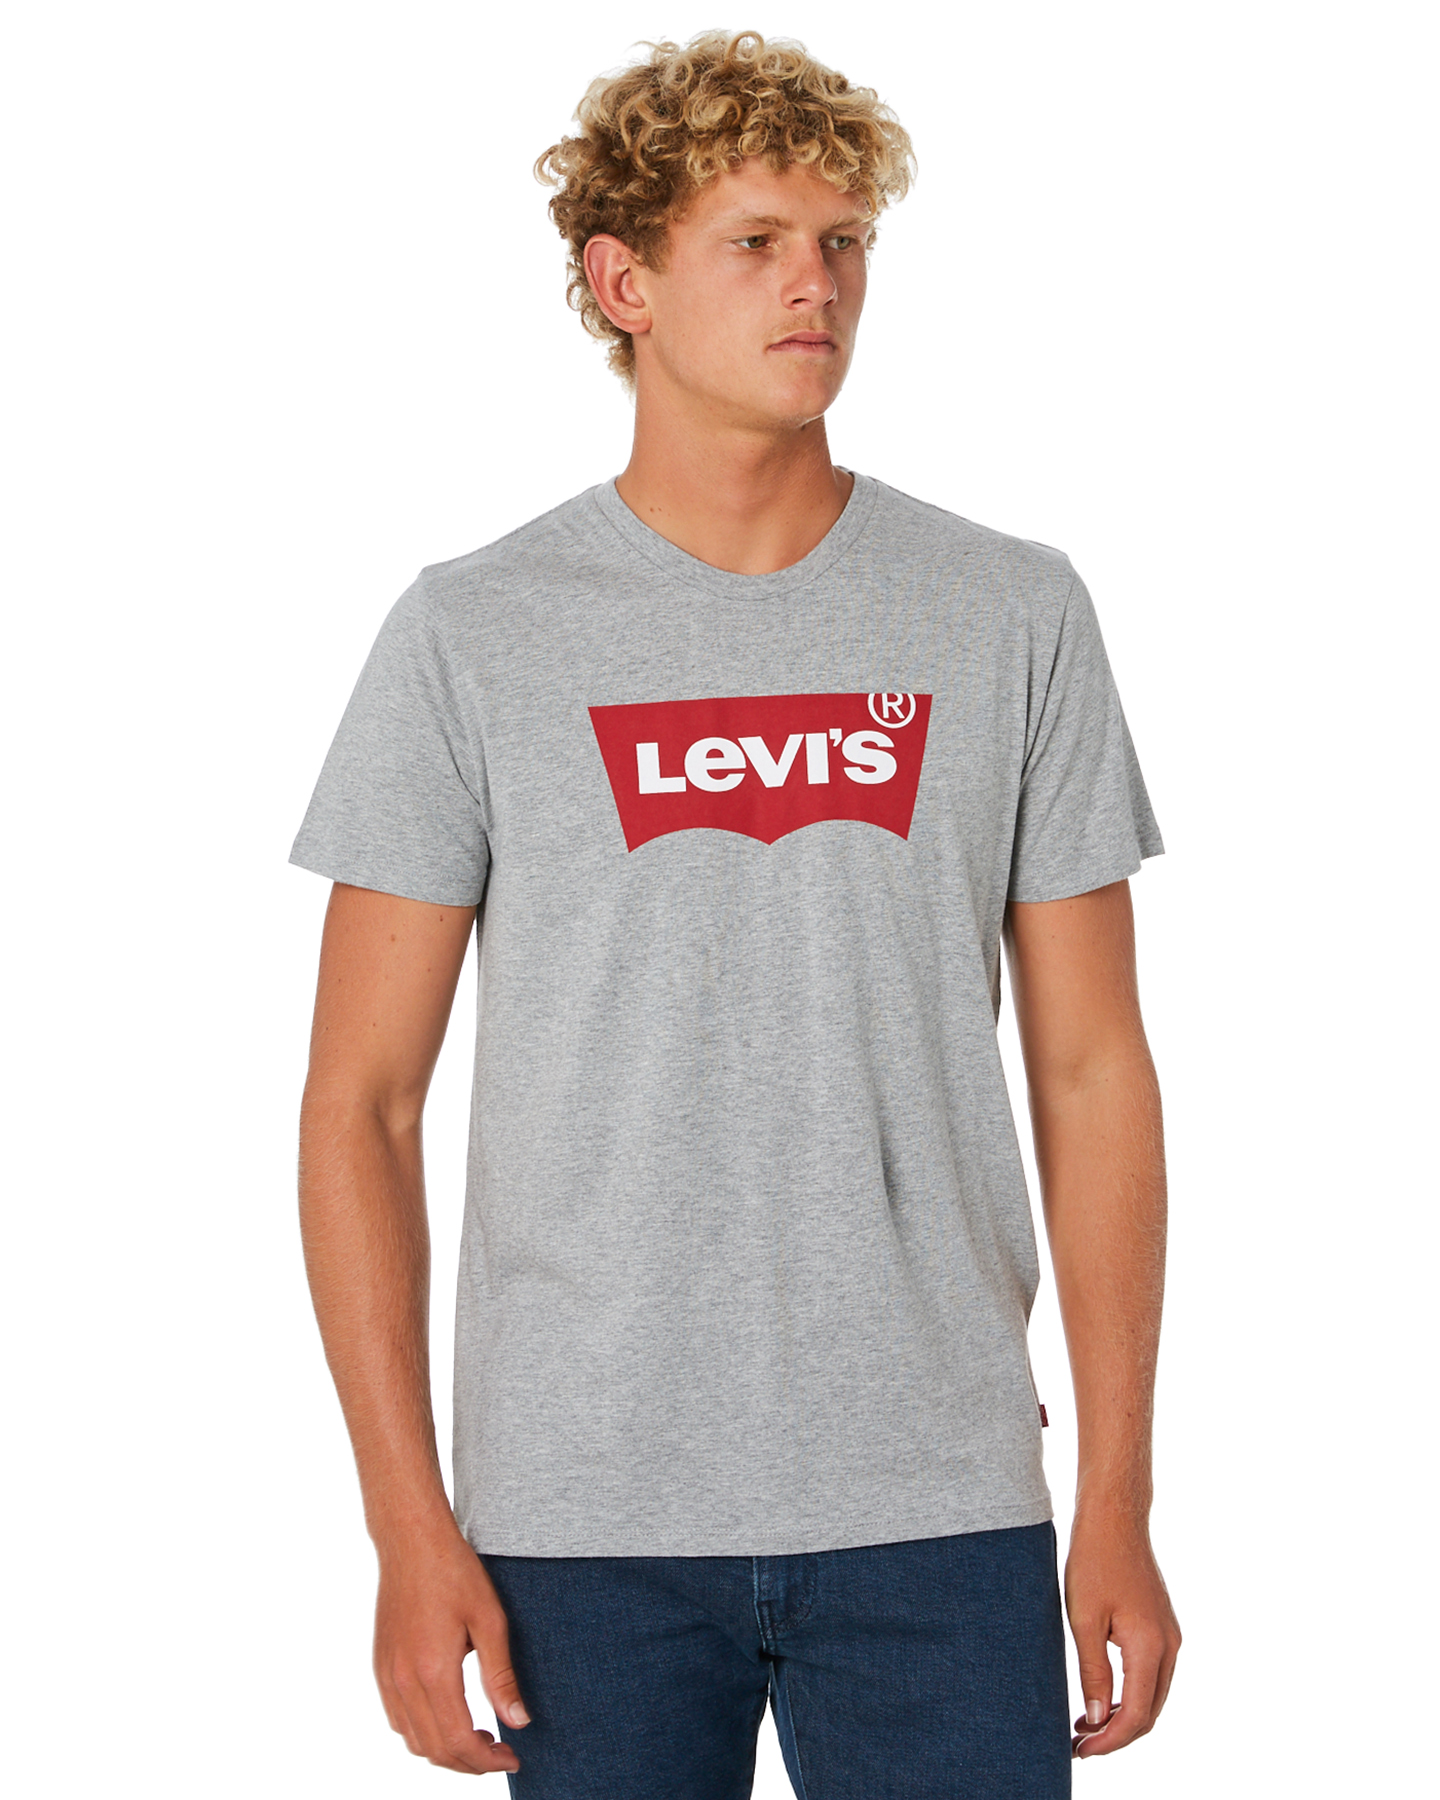 levis grey top